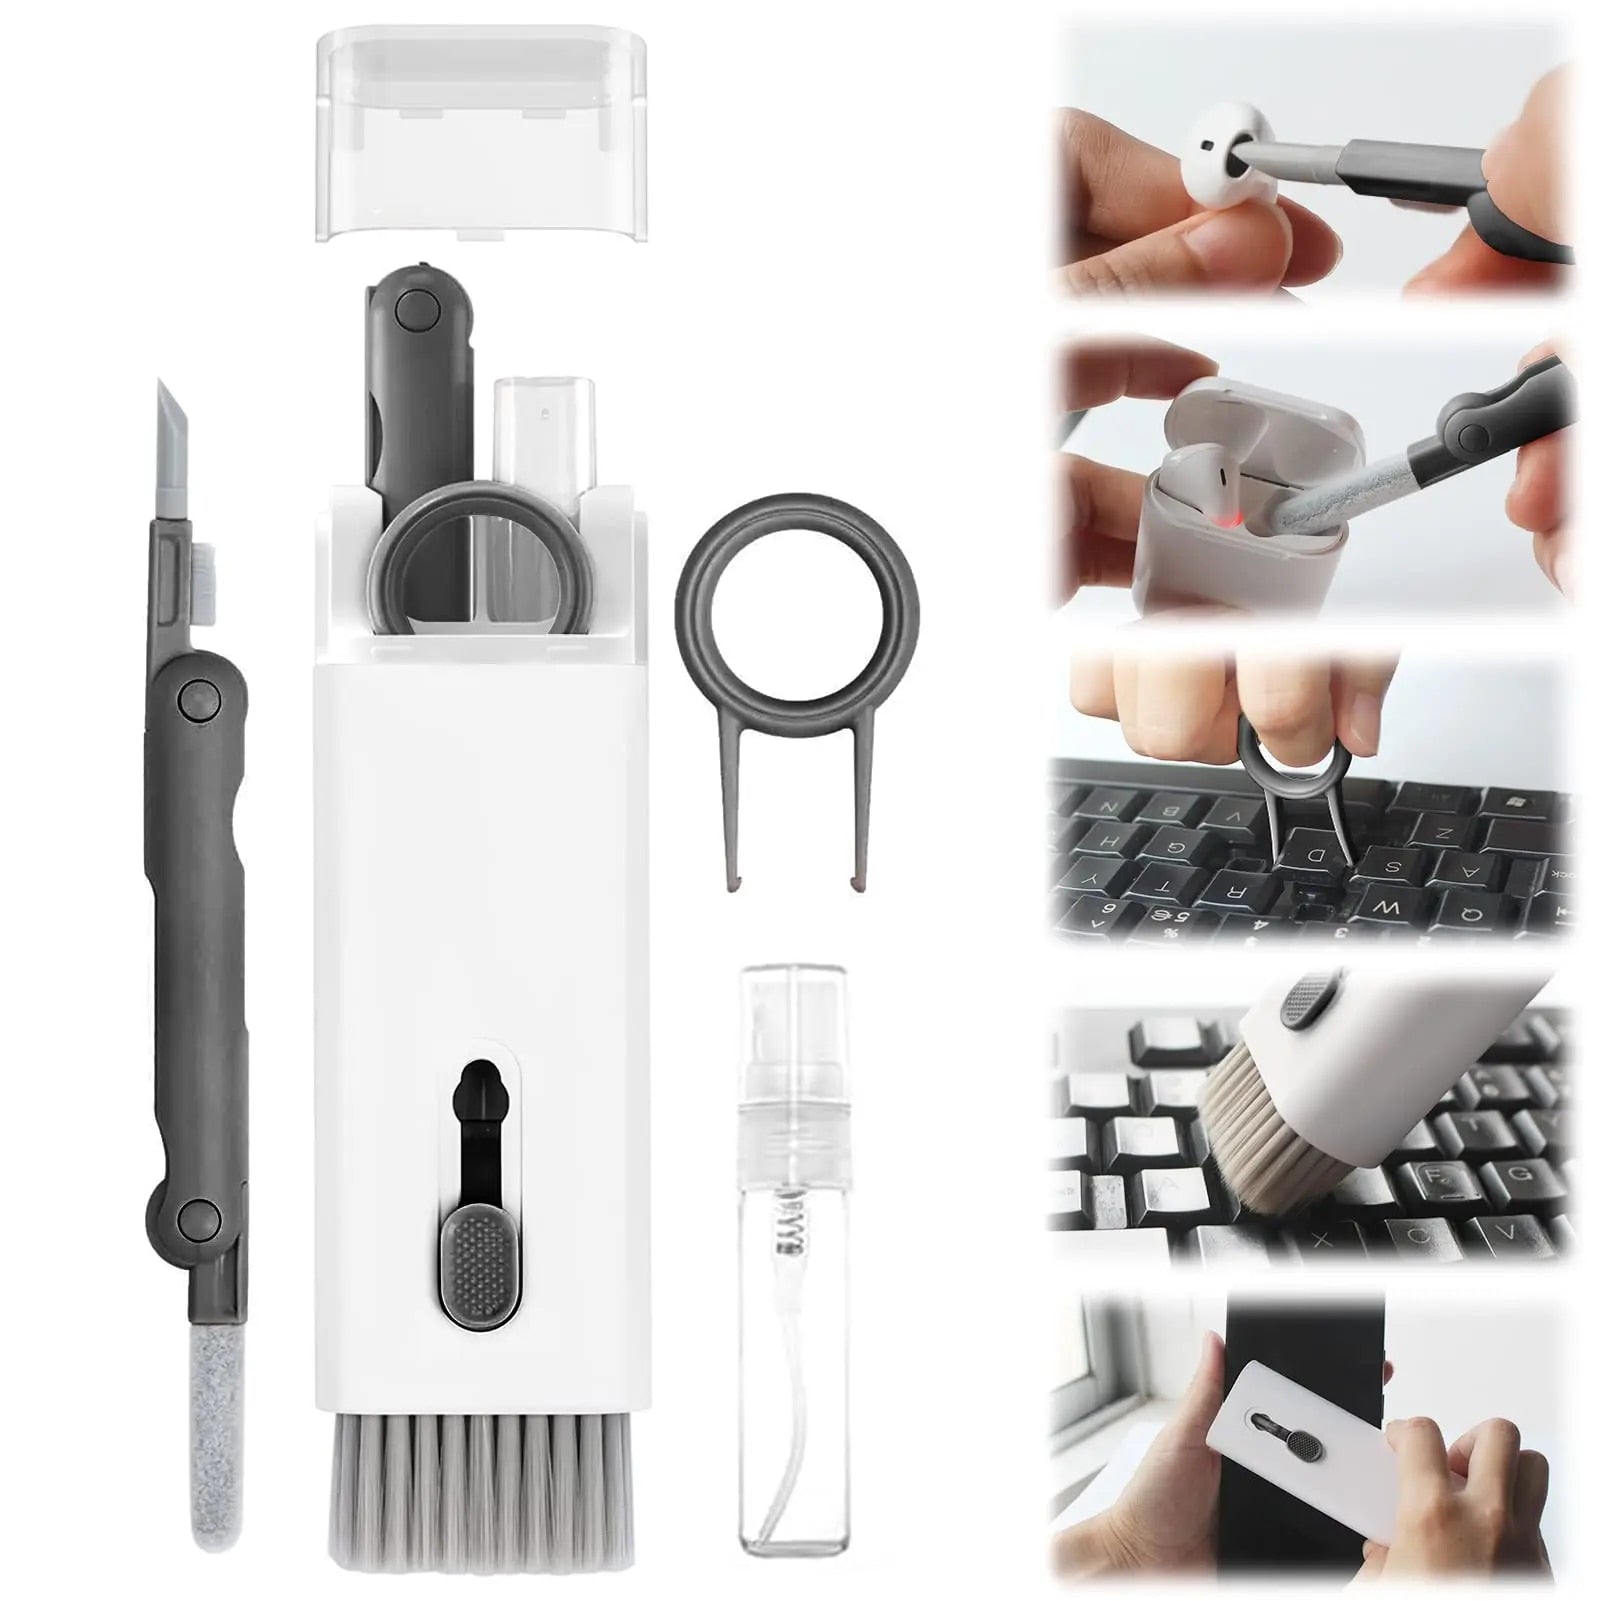 BINGONE Multi-Functional Portable Electronic Cleaning Kit, 20-in-1  Electronics Cleaner Kit, Keyboard Cleaner kit, Portable Multifunctional  Cleaning